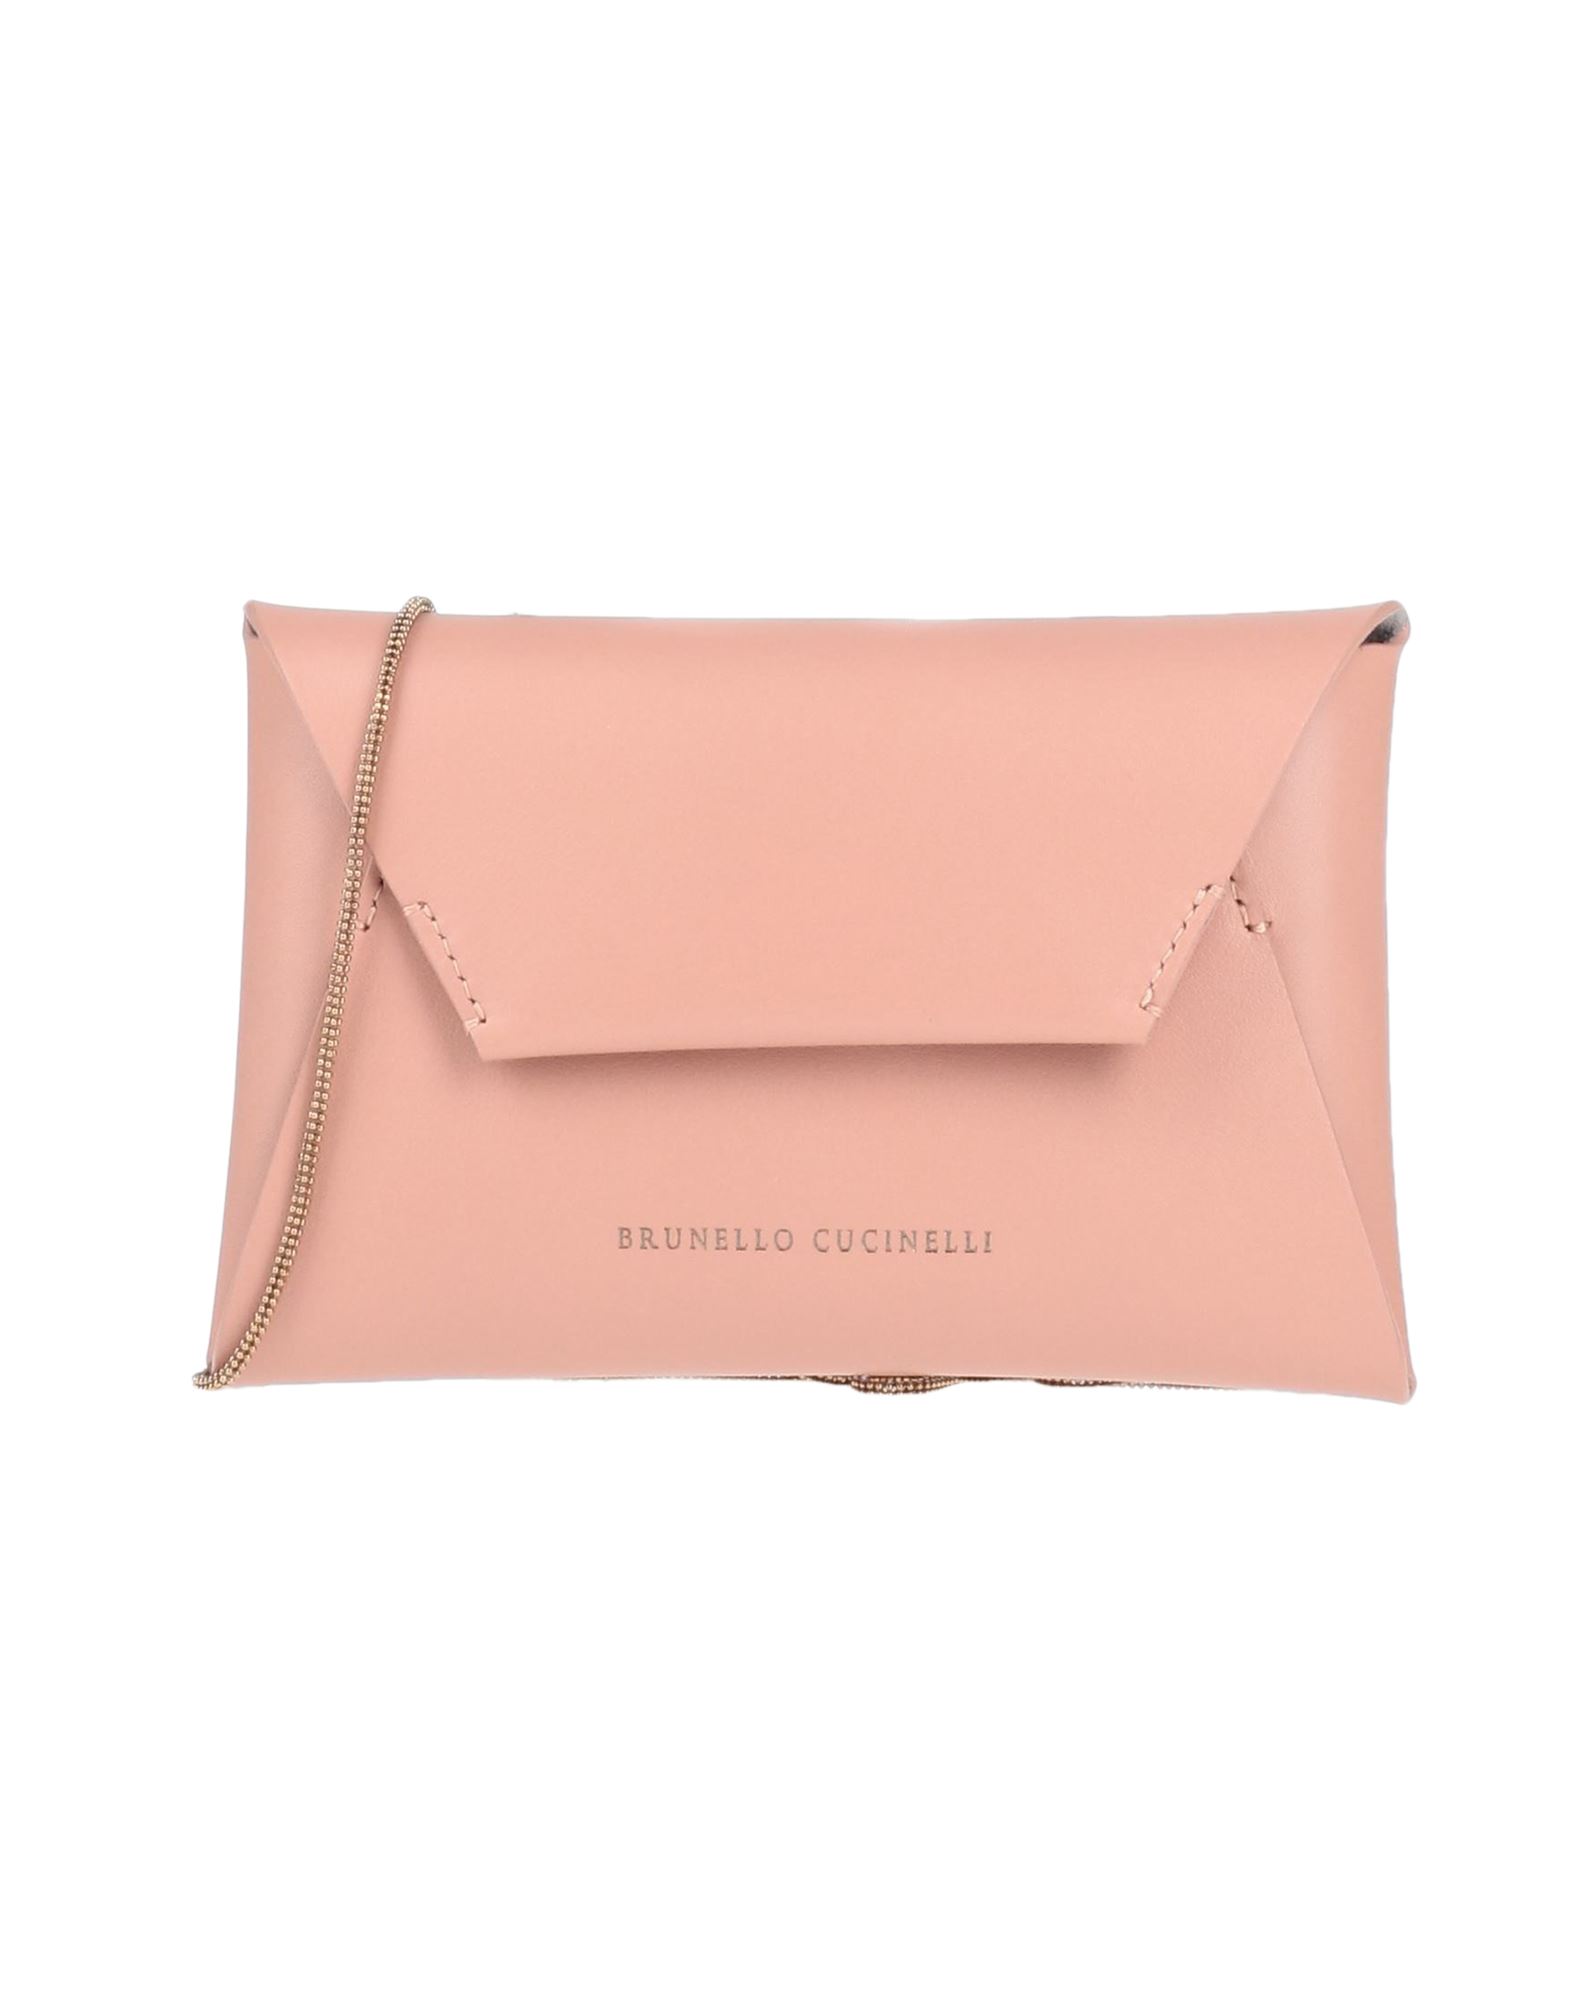 Brunello Cucinelli Handbags In Blush